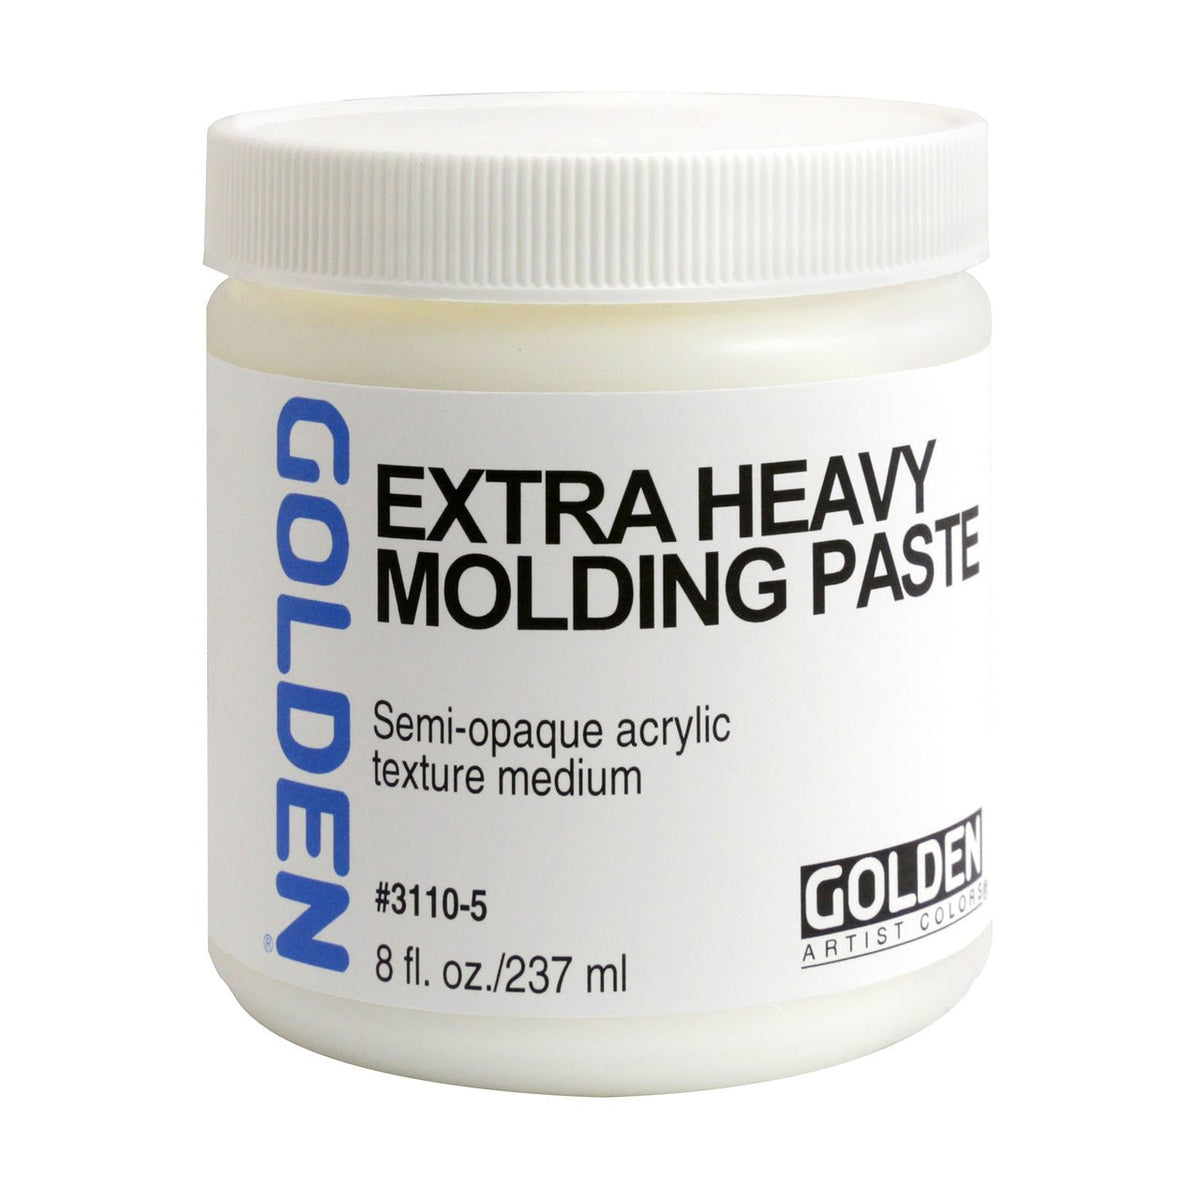 Golden Extra Heavy Molding Paste 8 oz - merriartist.com